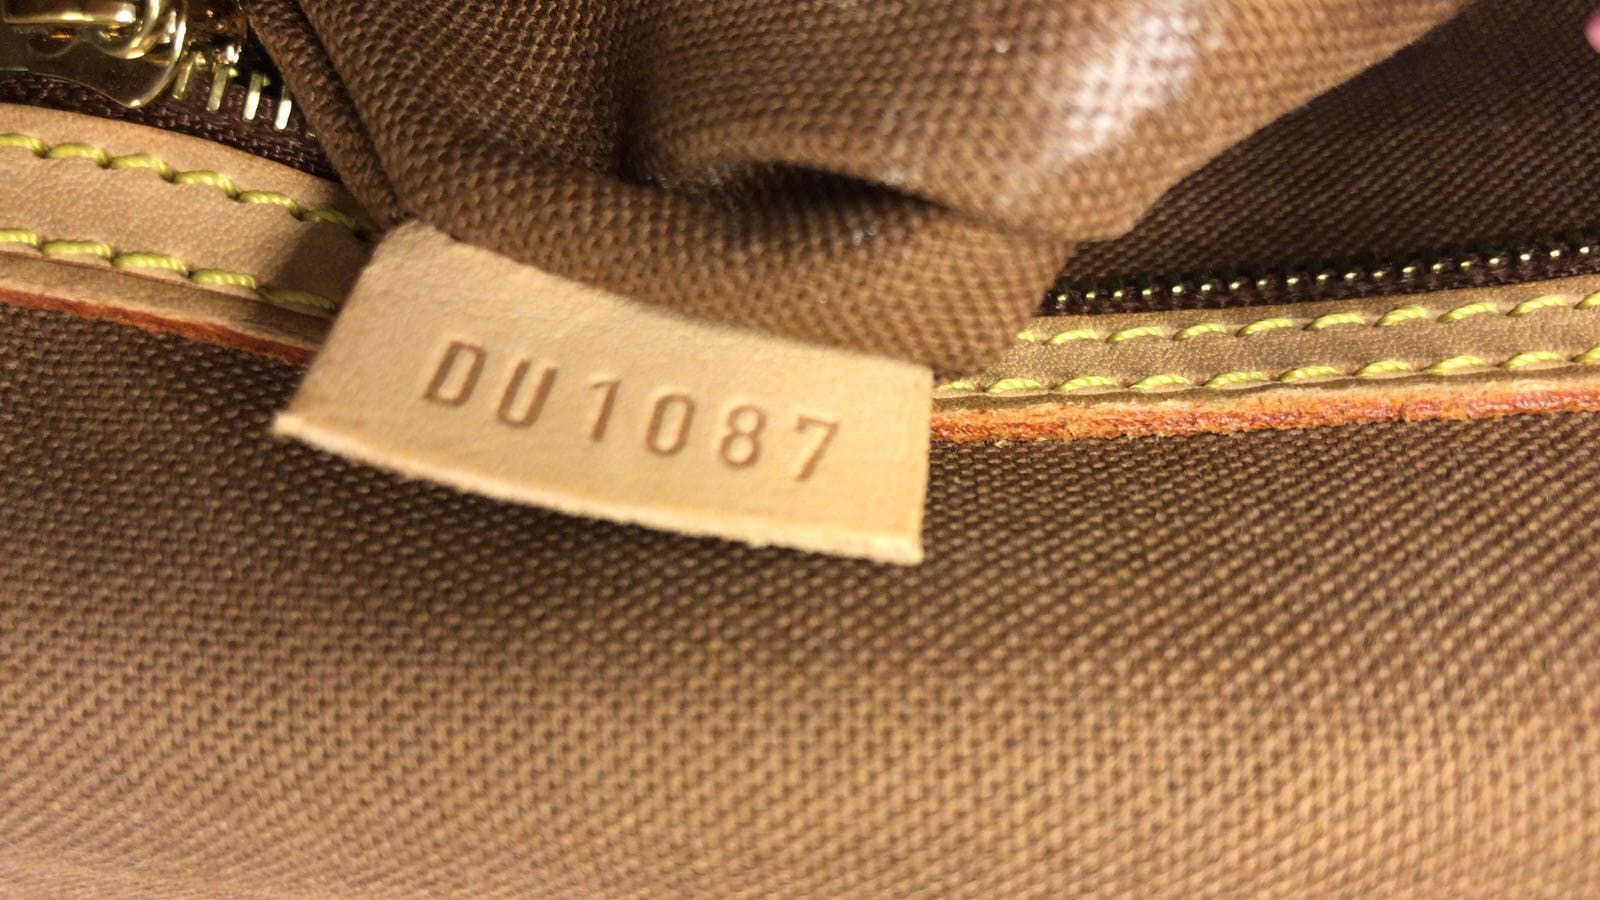 Louis Vuitton brown monogram print leather 'Cherie' sling-back kitten –  Loop Generation